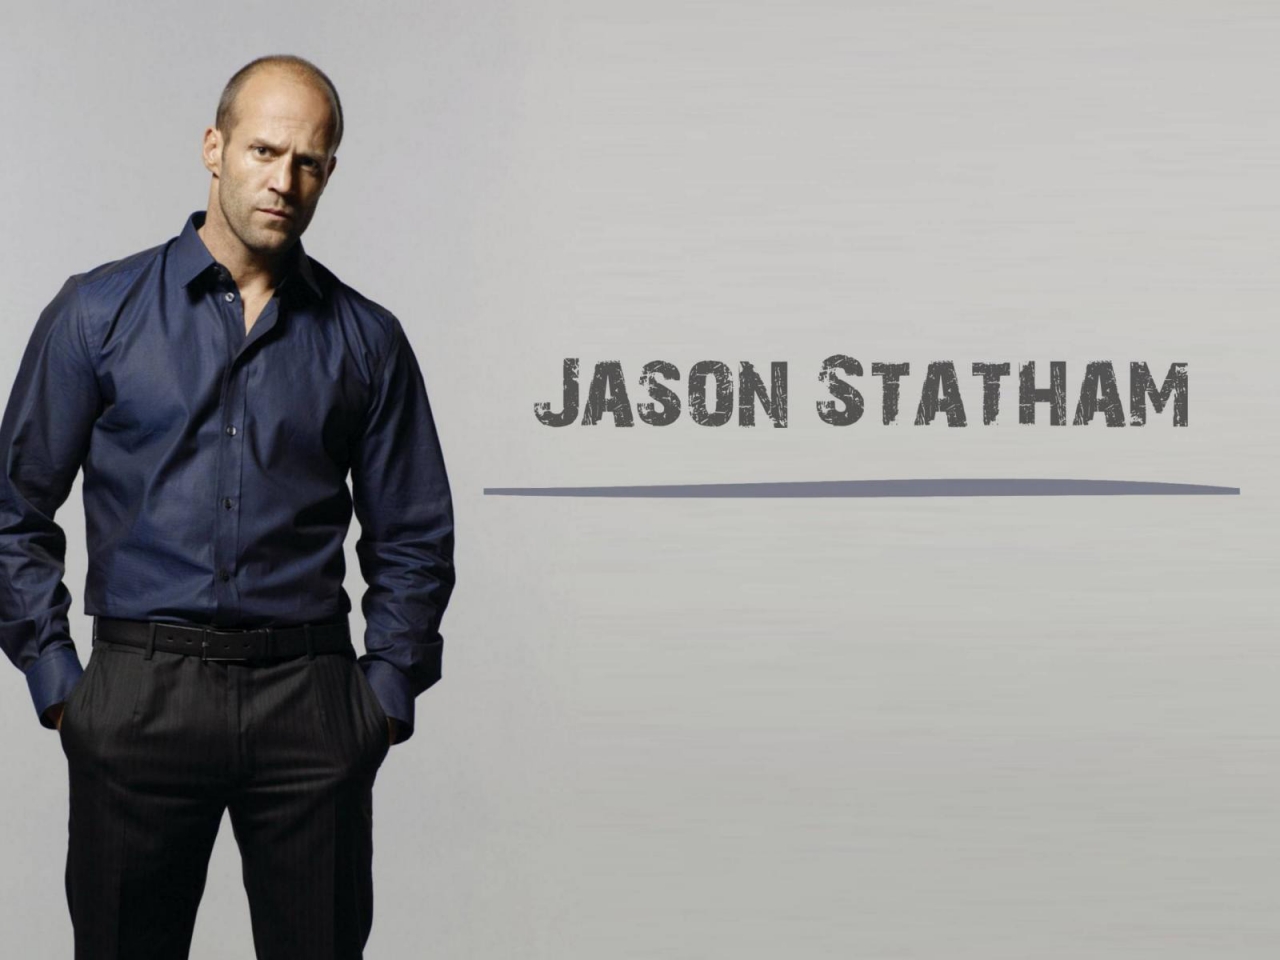 Jason Statham Poster for 1280 x 960 resolution